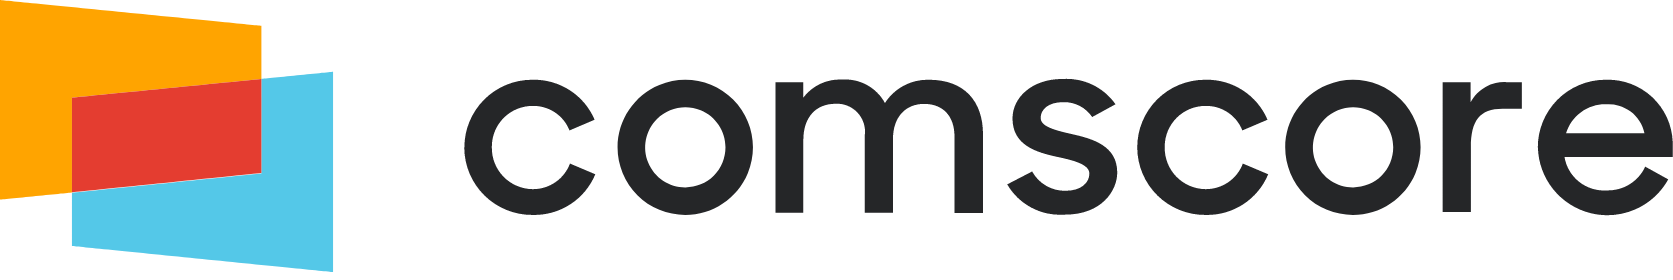 Comscore
 logo large (transparent PNG)